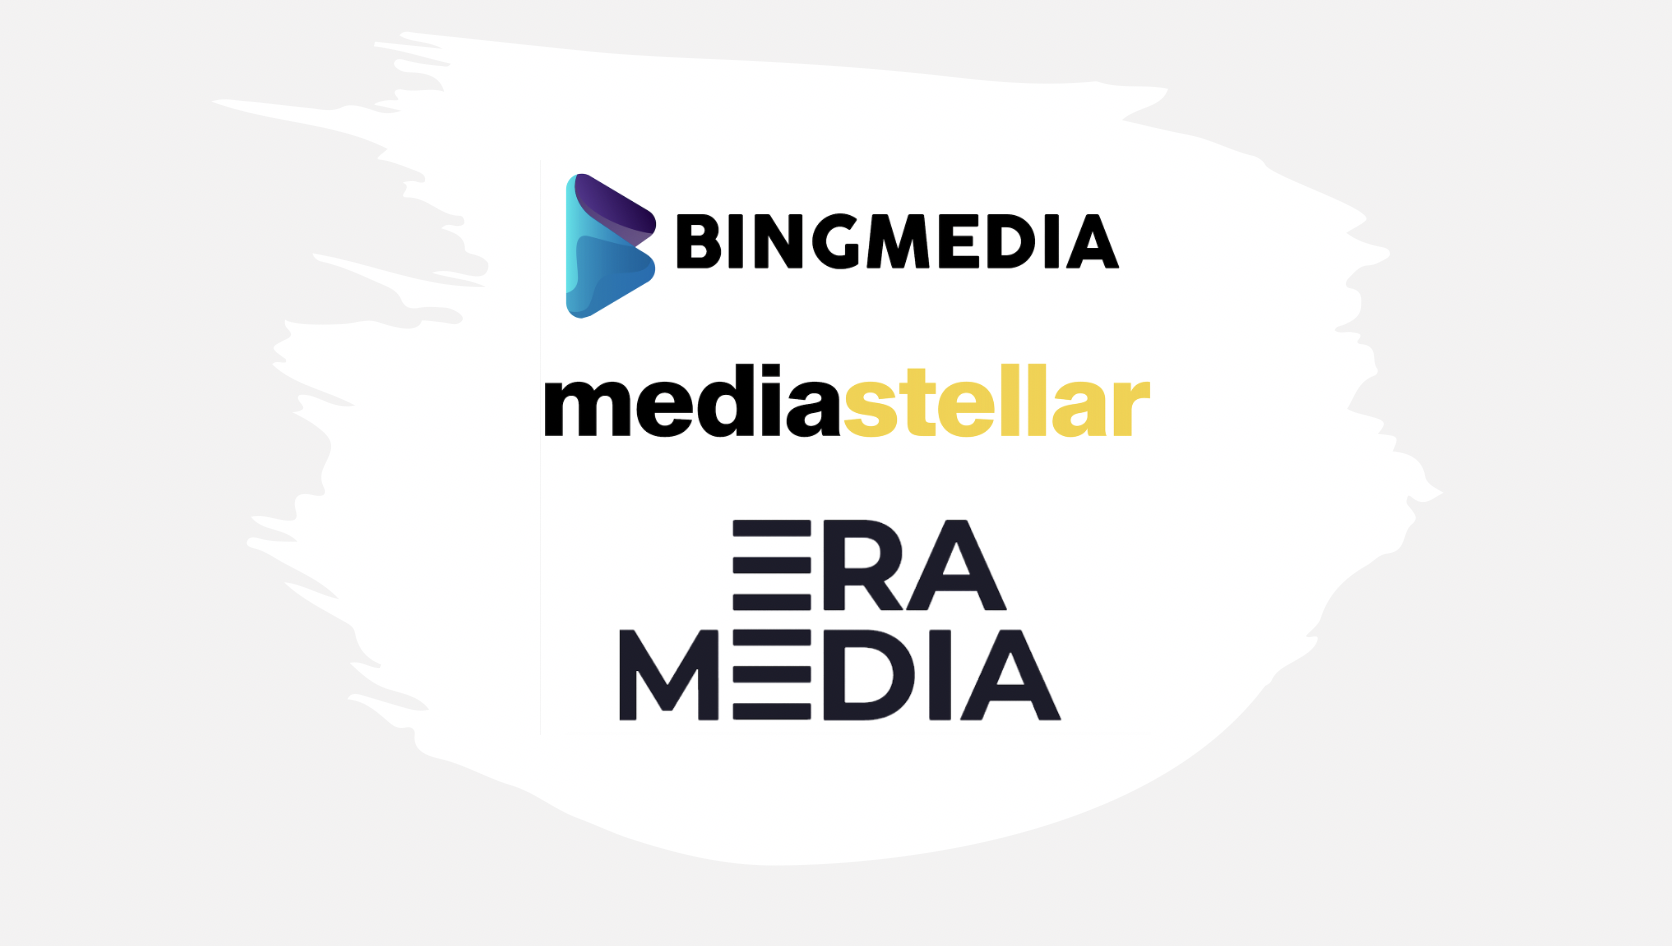 Exciting Partnership With Media Stellar, Bing Media, and Era Media